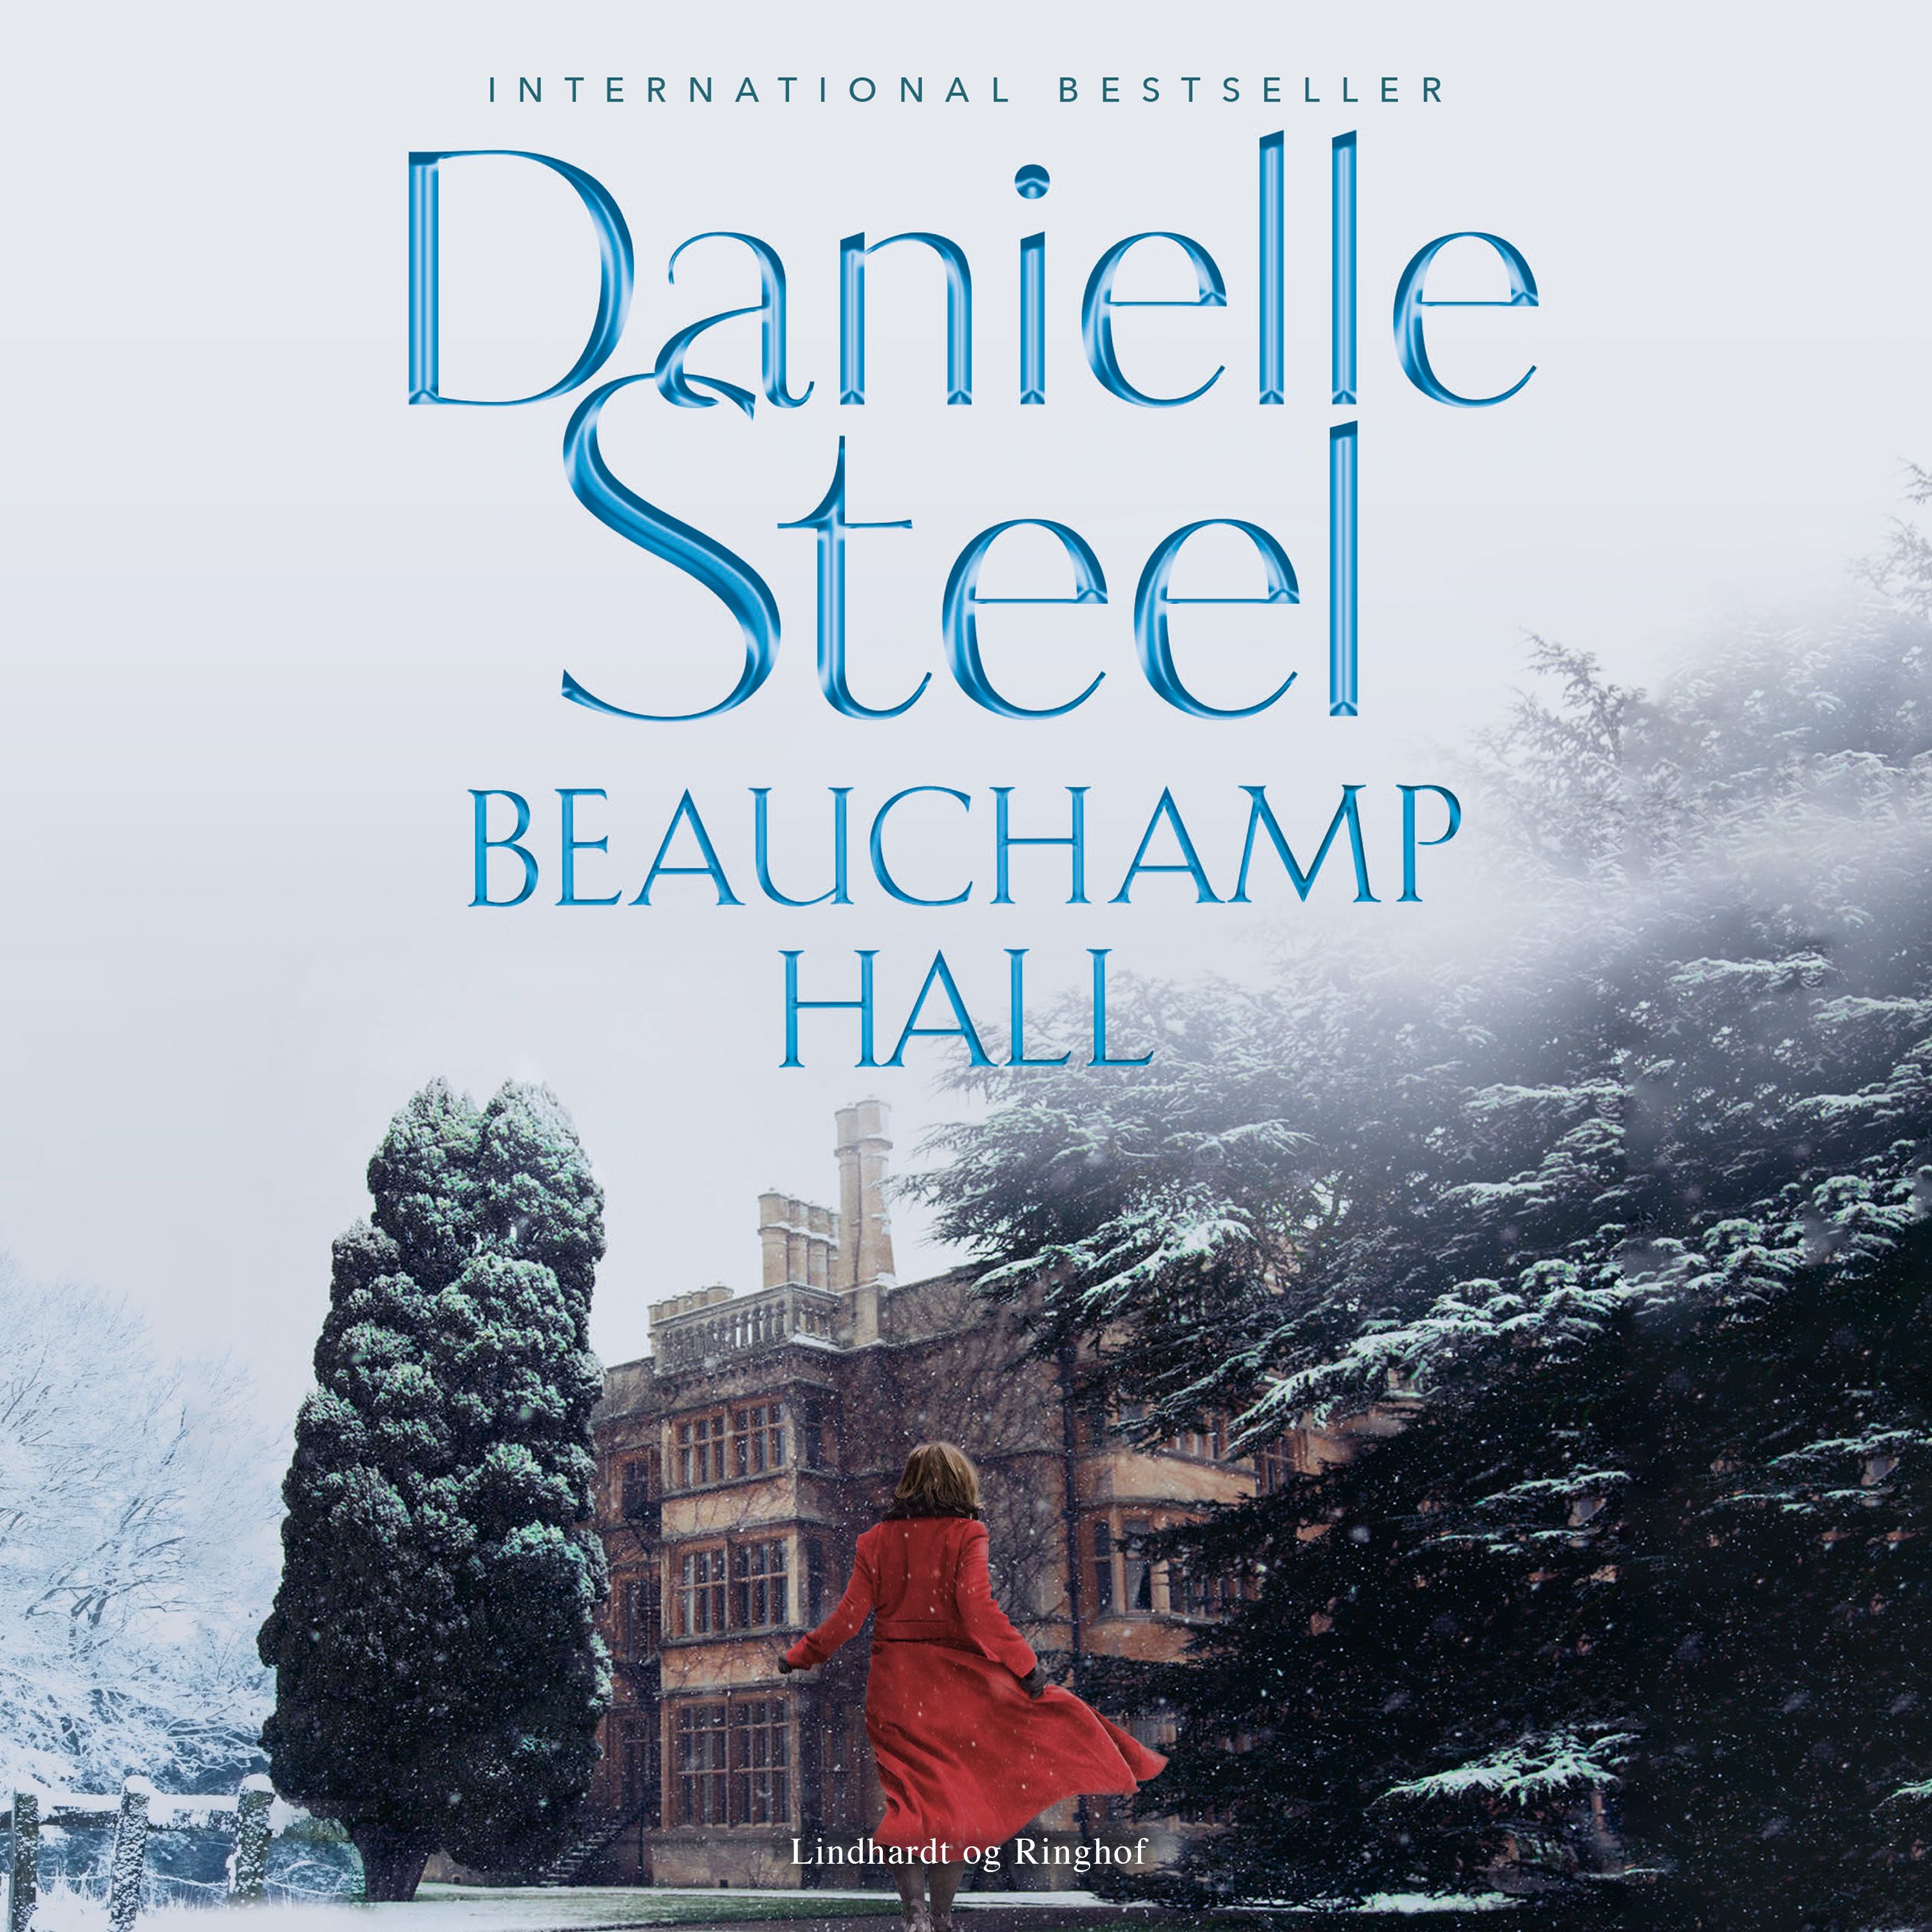 Beauchamp Hall, lydbog af Danielle Steel